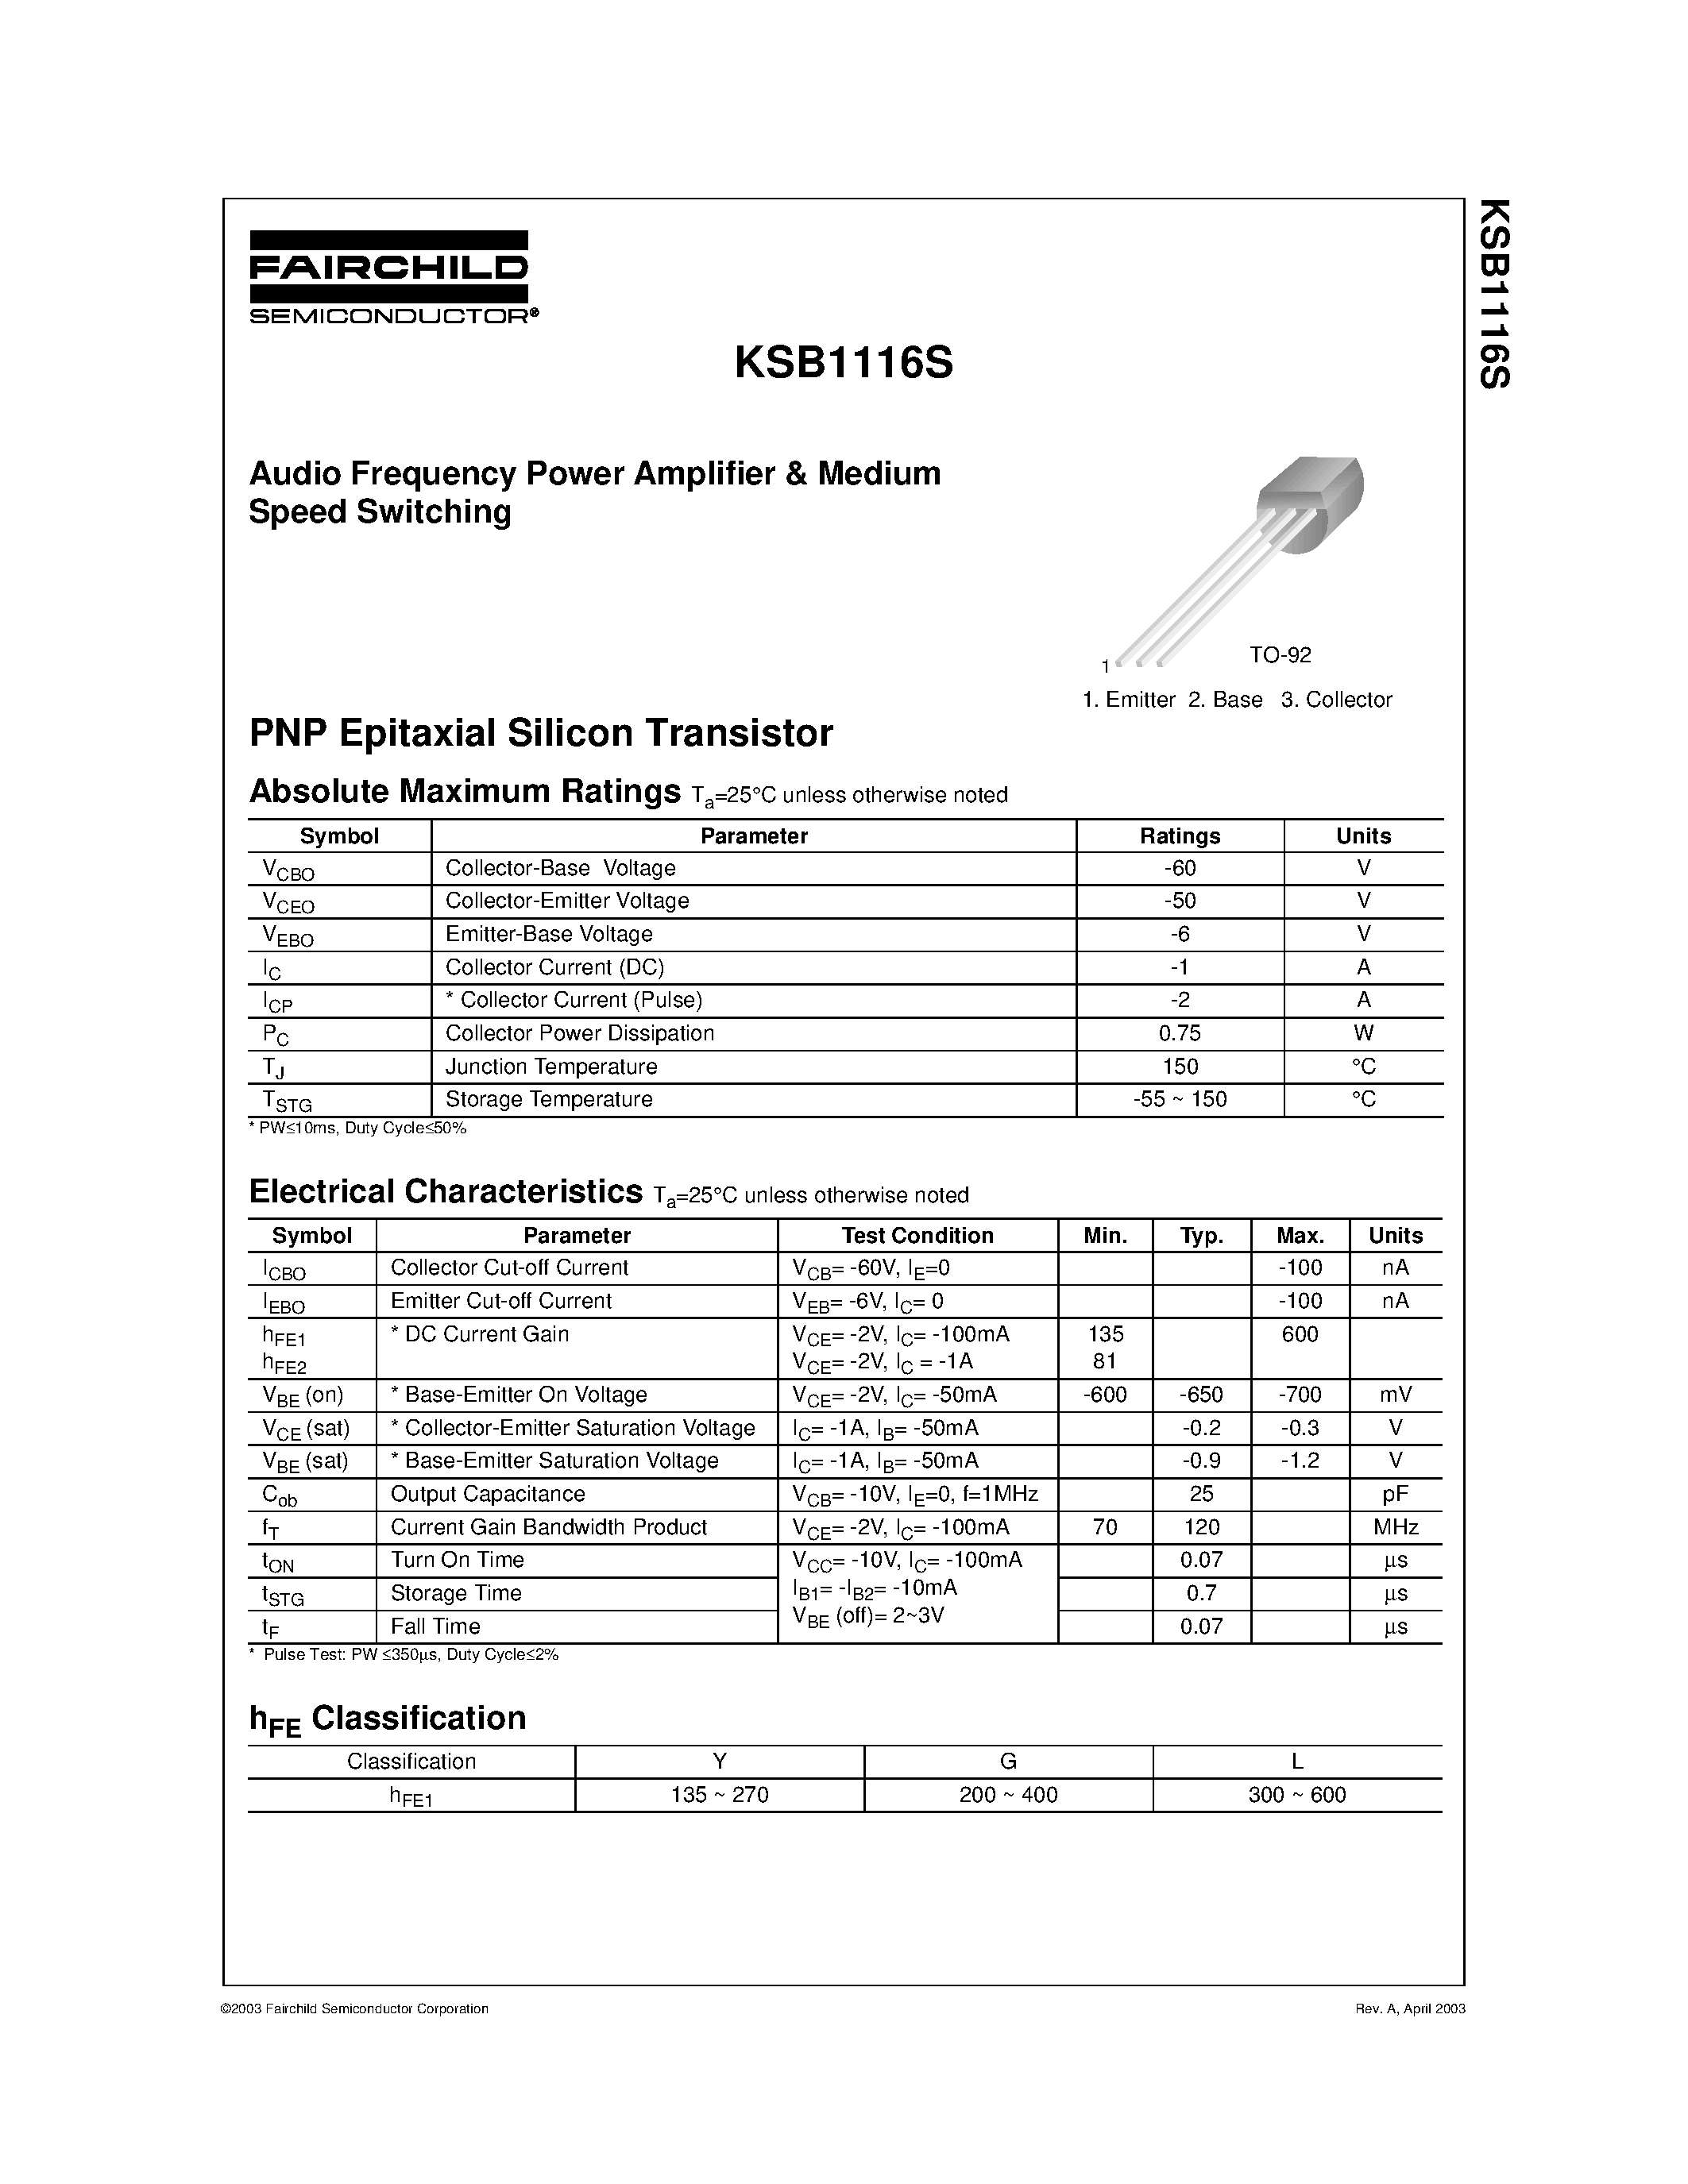 Datasheet KSB1116S - Audio Frequency Power Amplifier Medium Speed Switching page 1